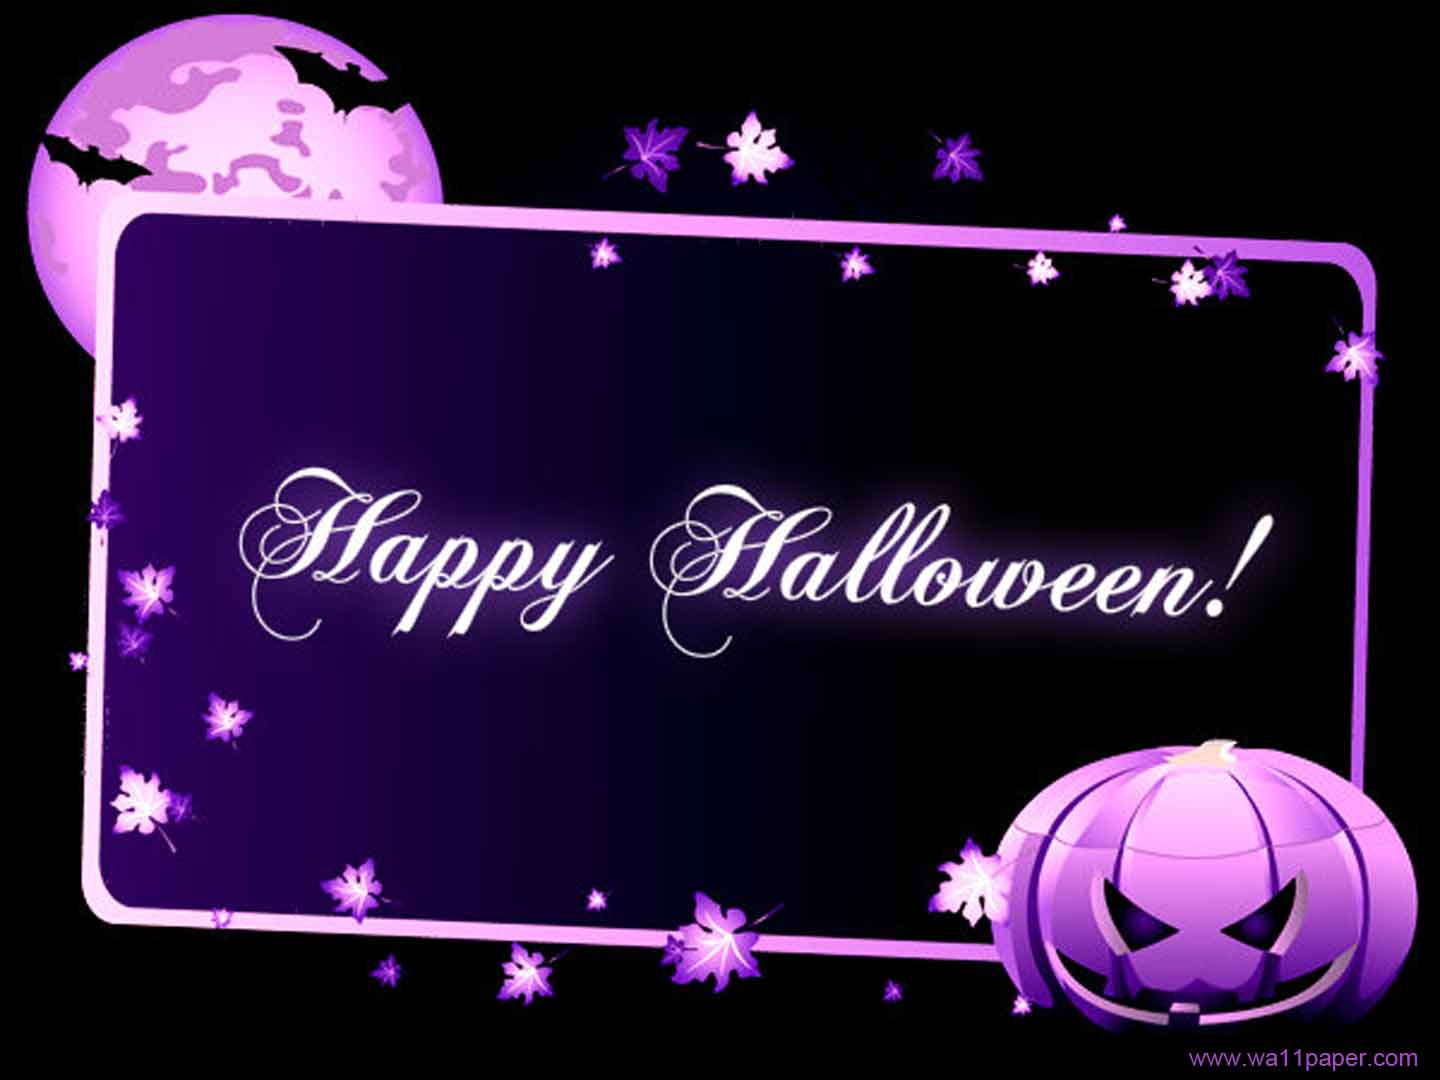 Free Wallpaper Halloween Purple Card wallpaper